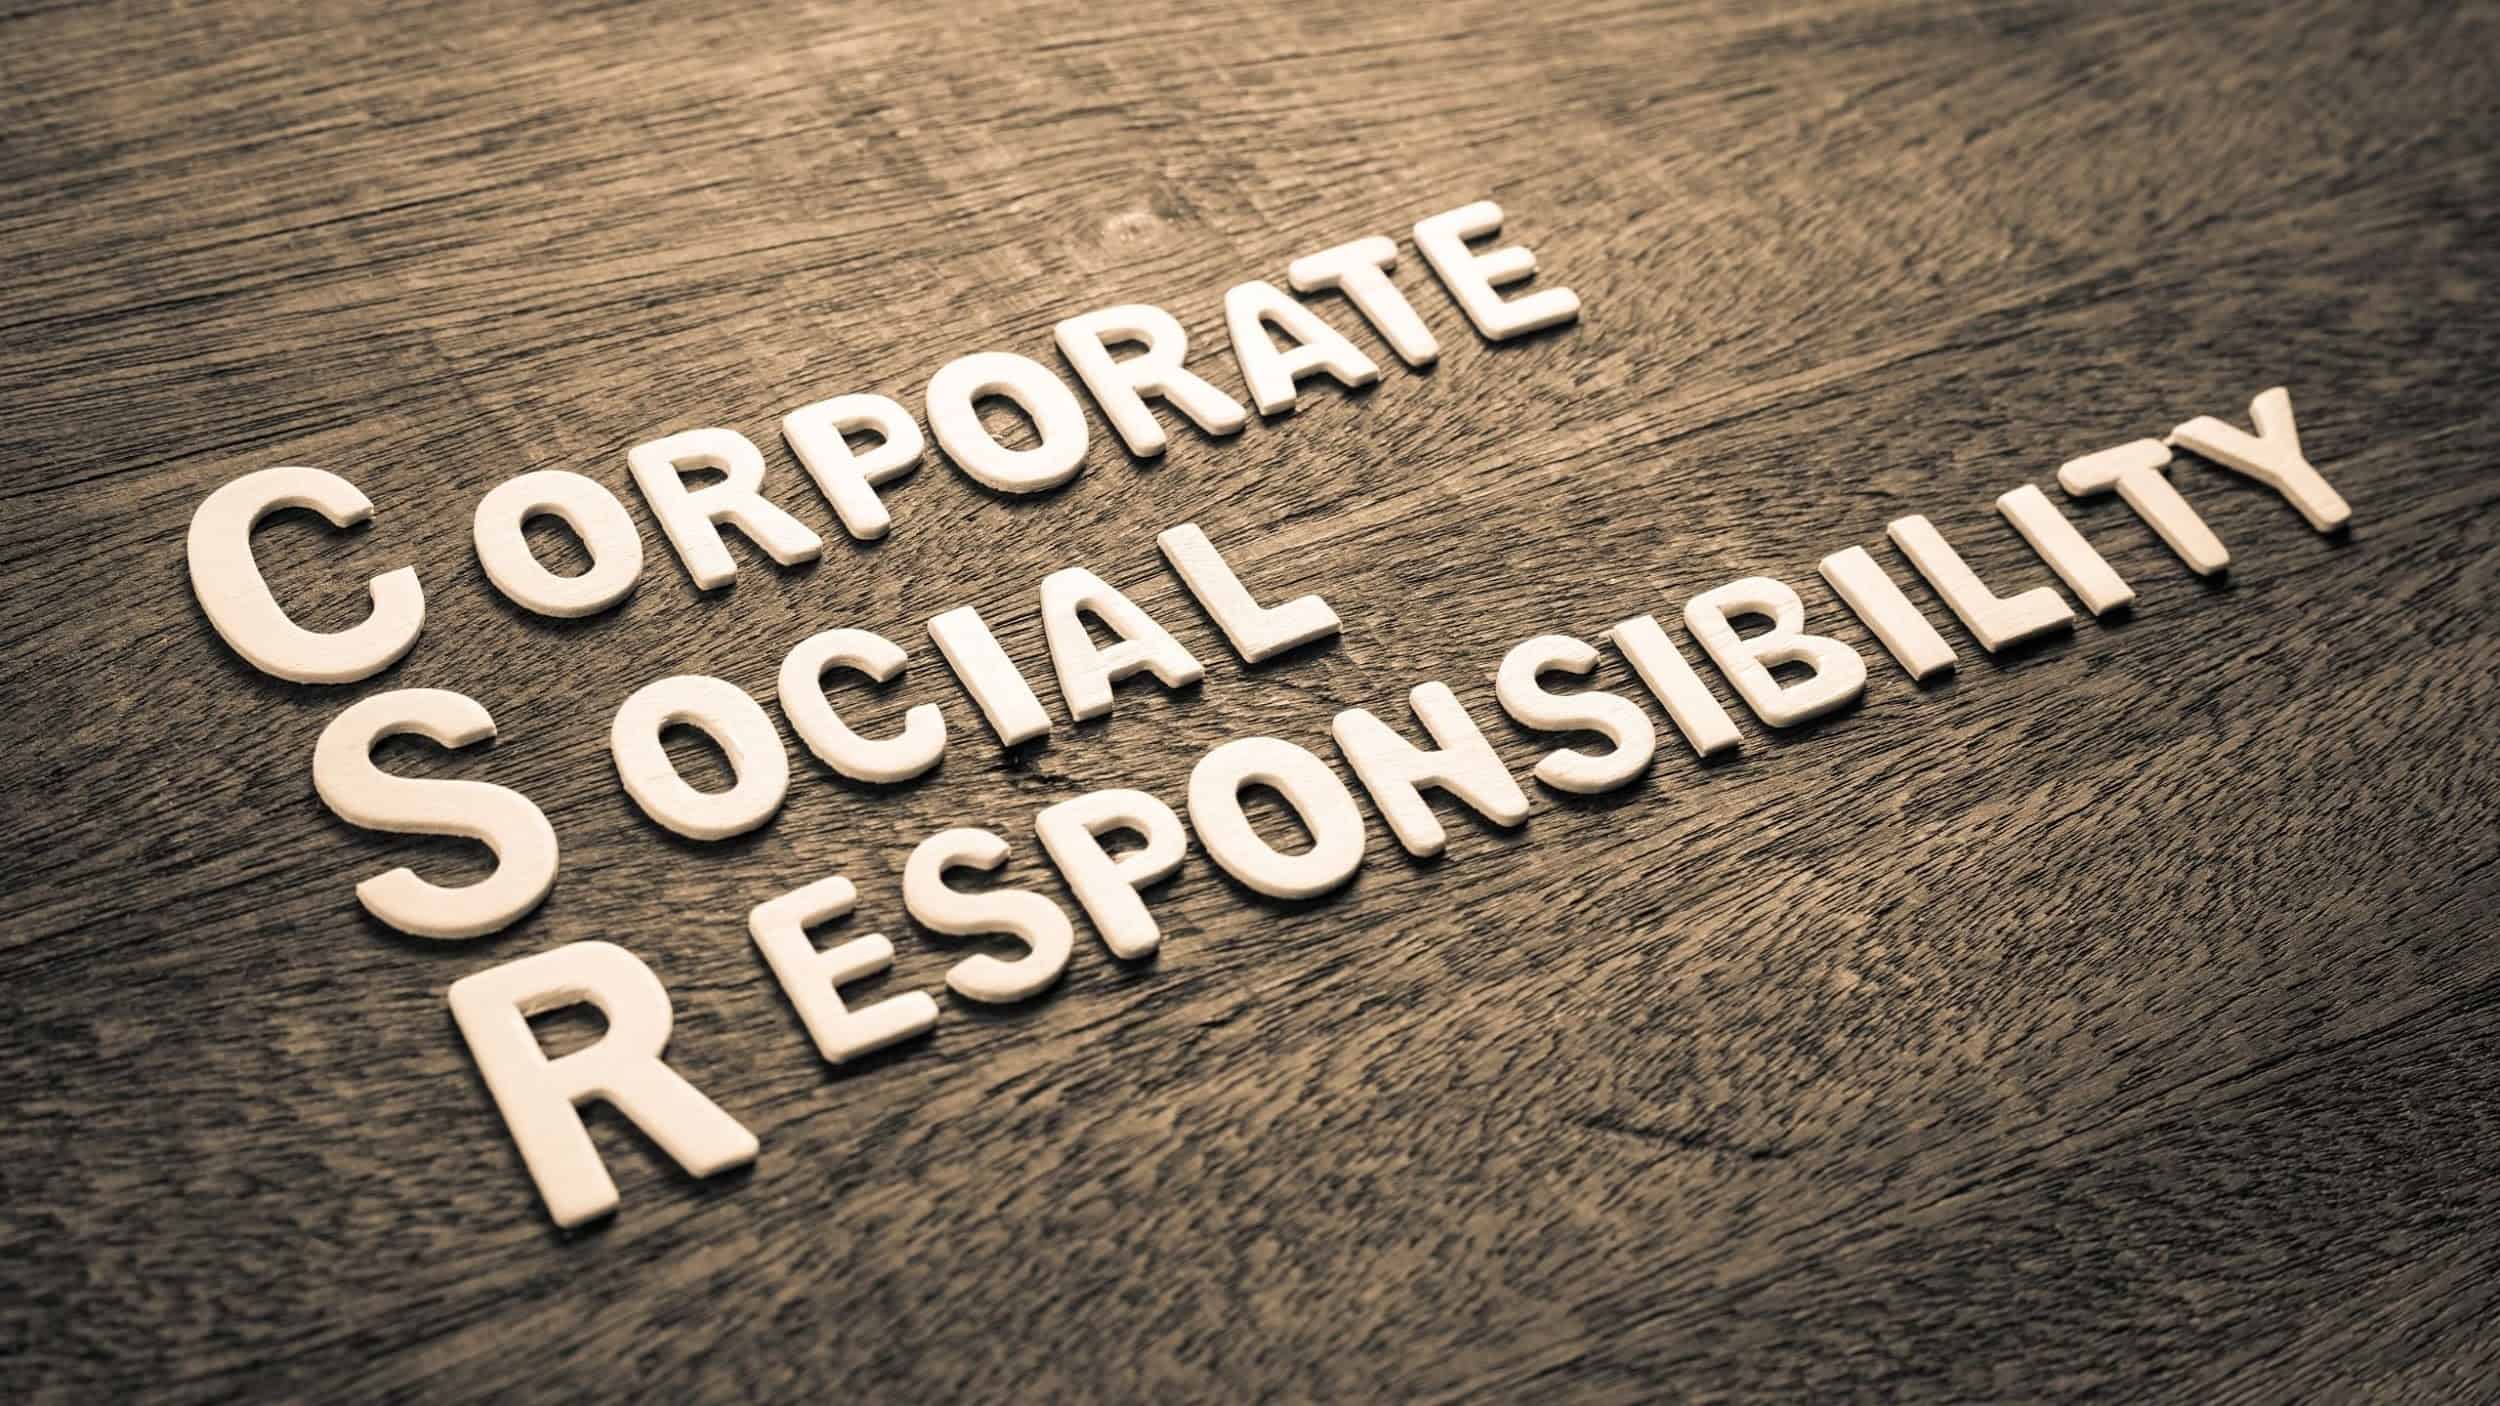 corporate social responsibility